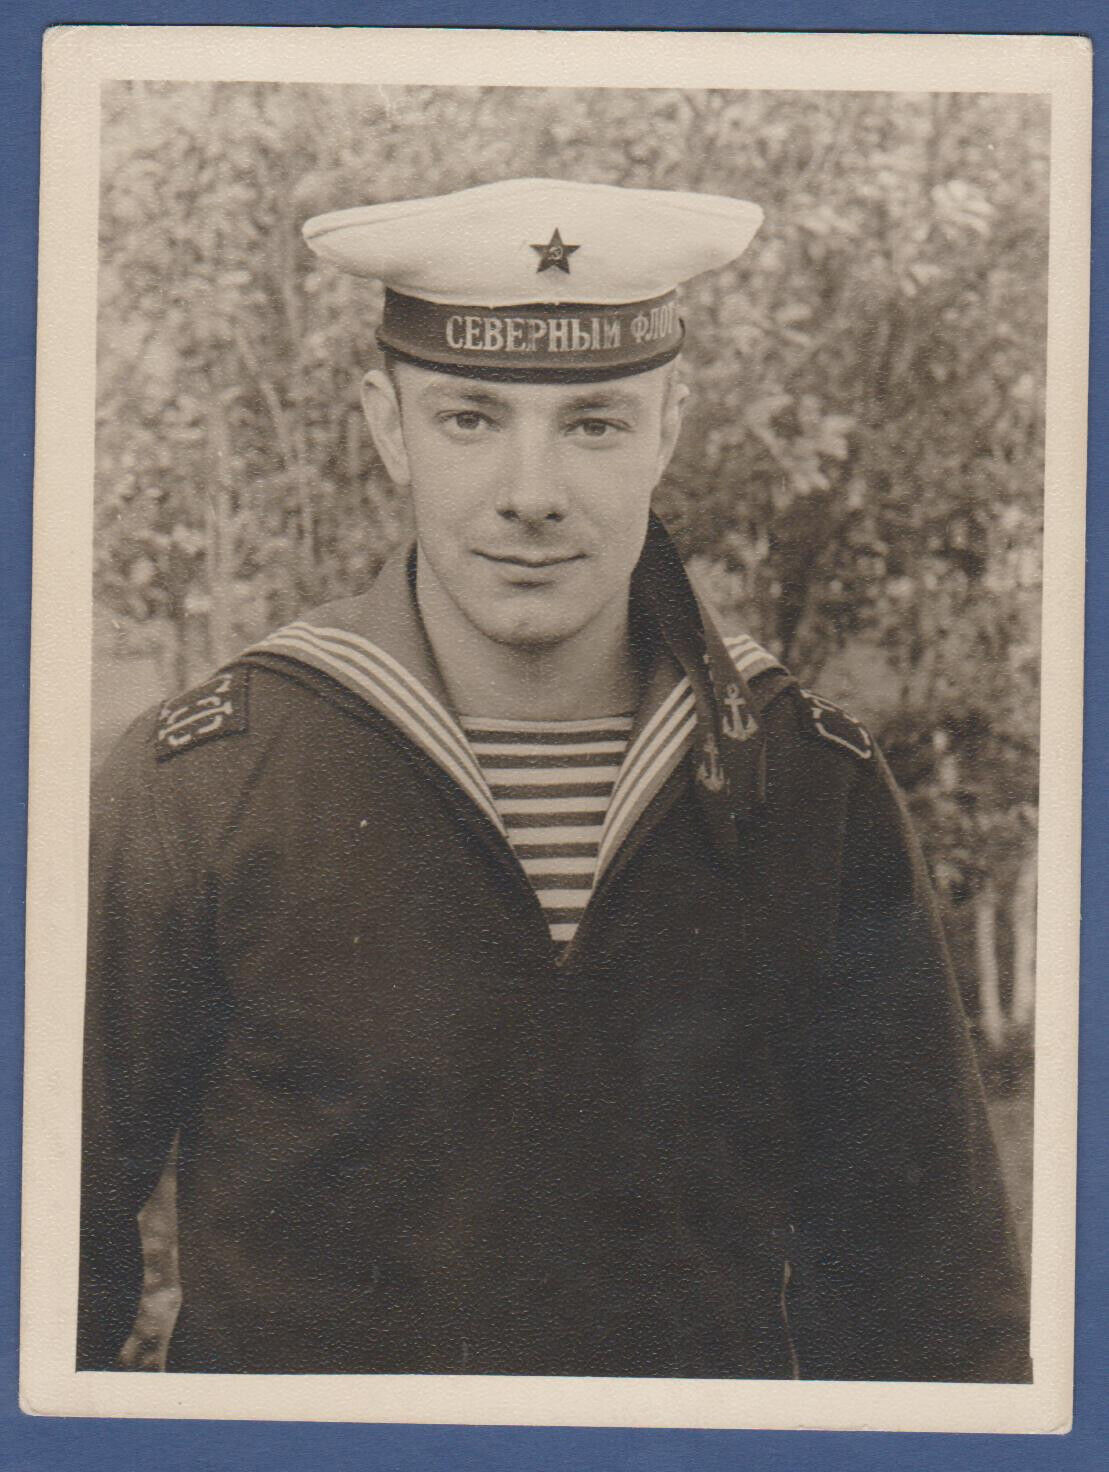 Affectionate Gentle Man Sailor Guy Boy in Navy Uniform Soviet Vintage Photo USSR